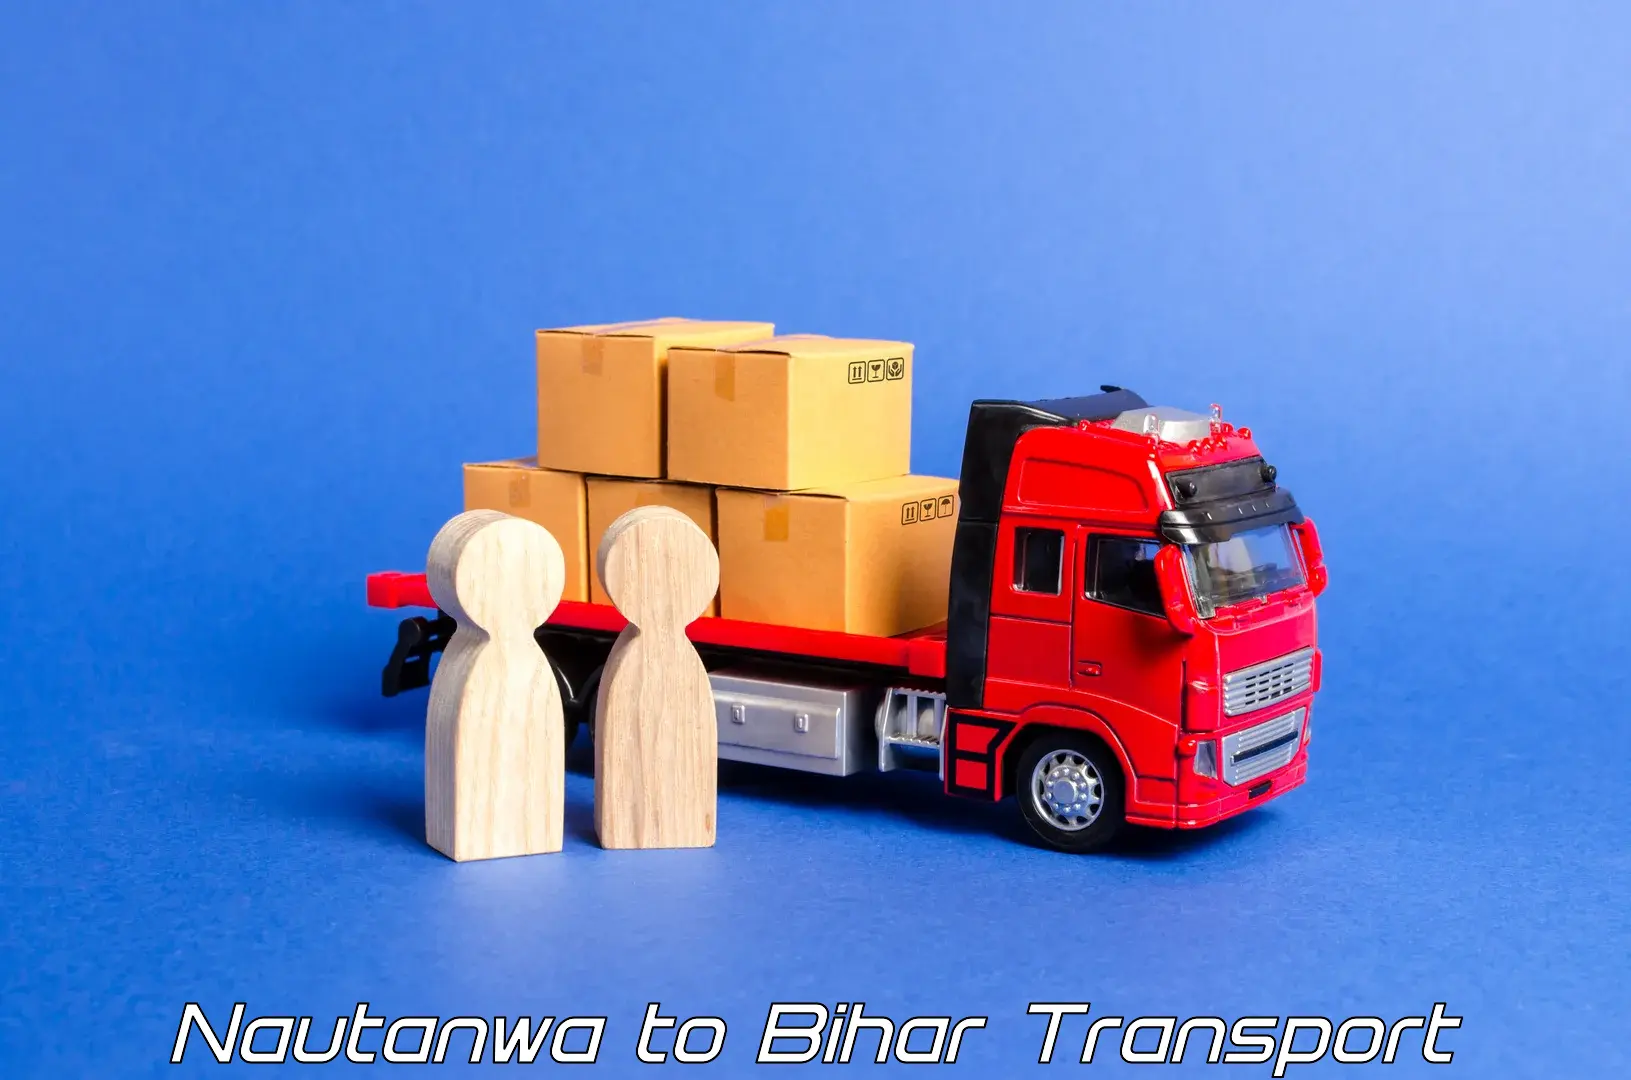 Shipping partner Nautanwa to Bihar